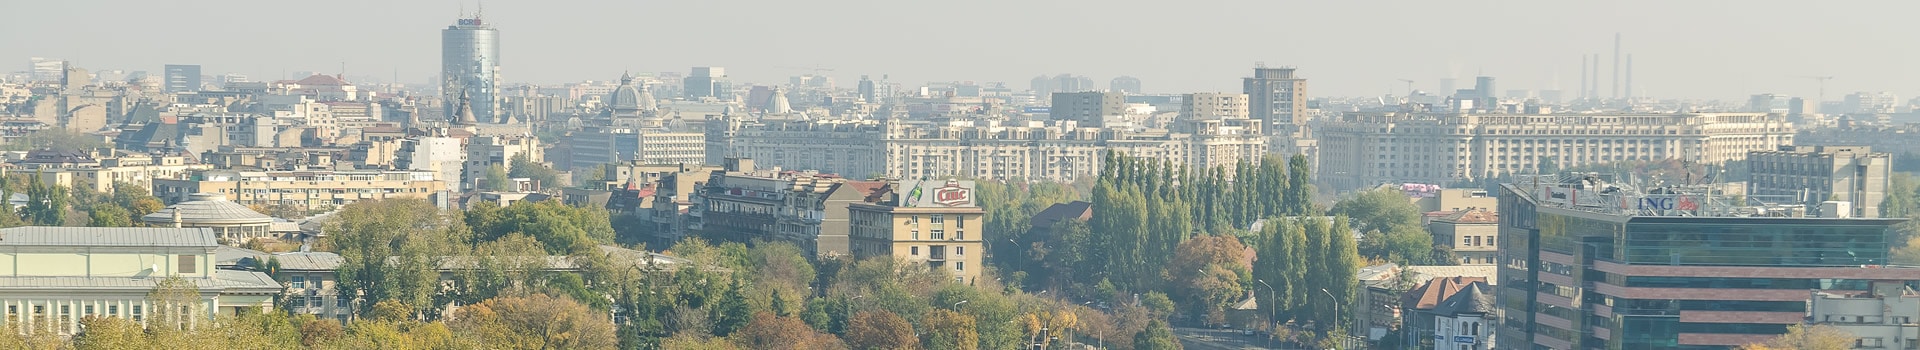 Zaragoza - Bukarest